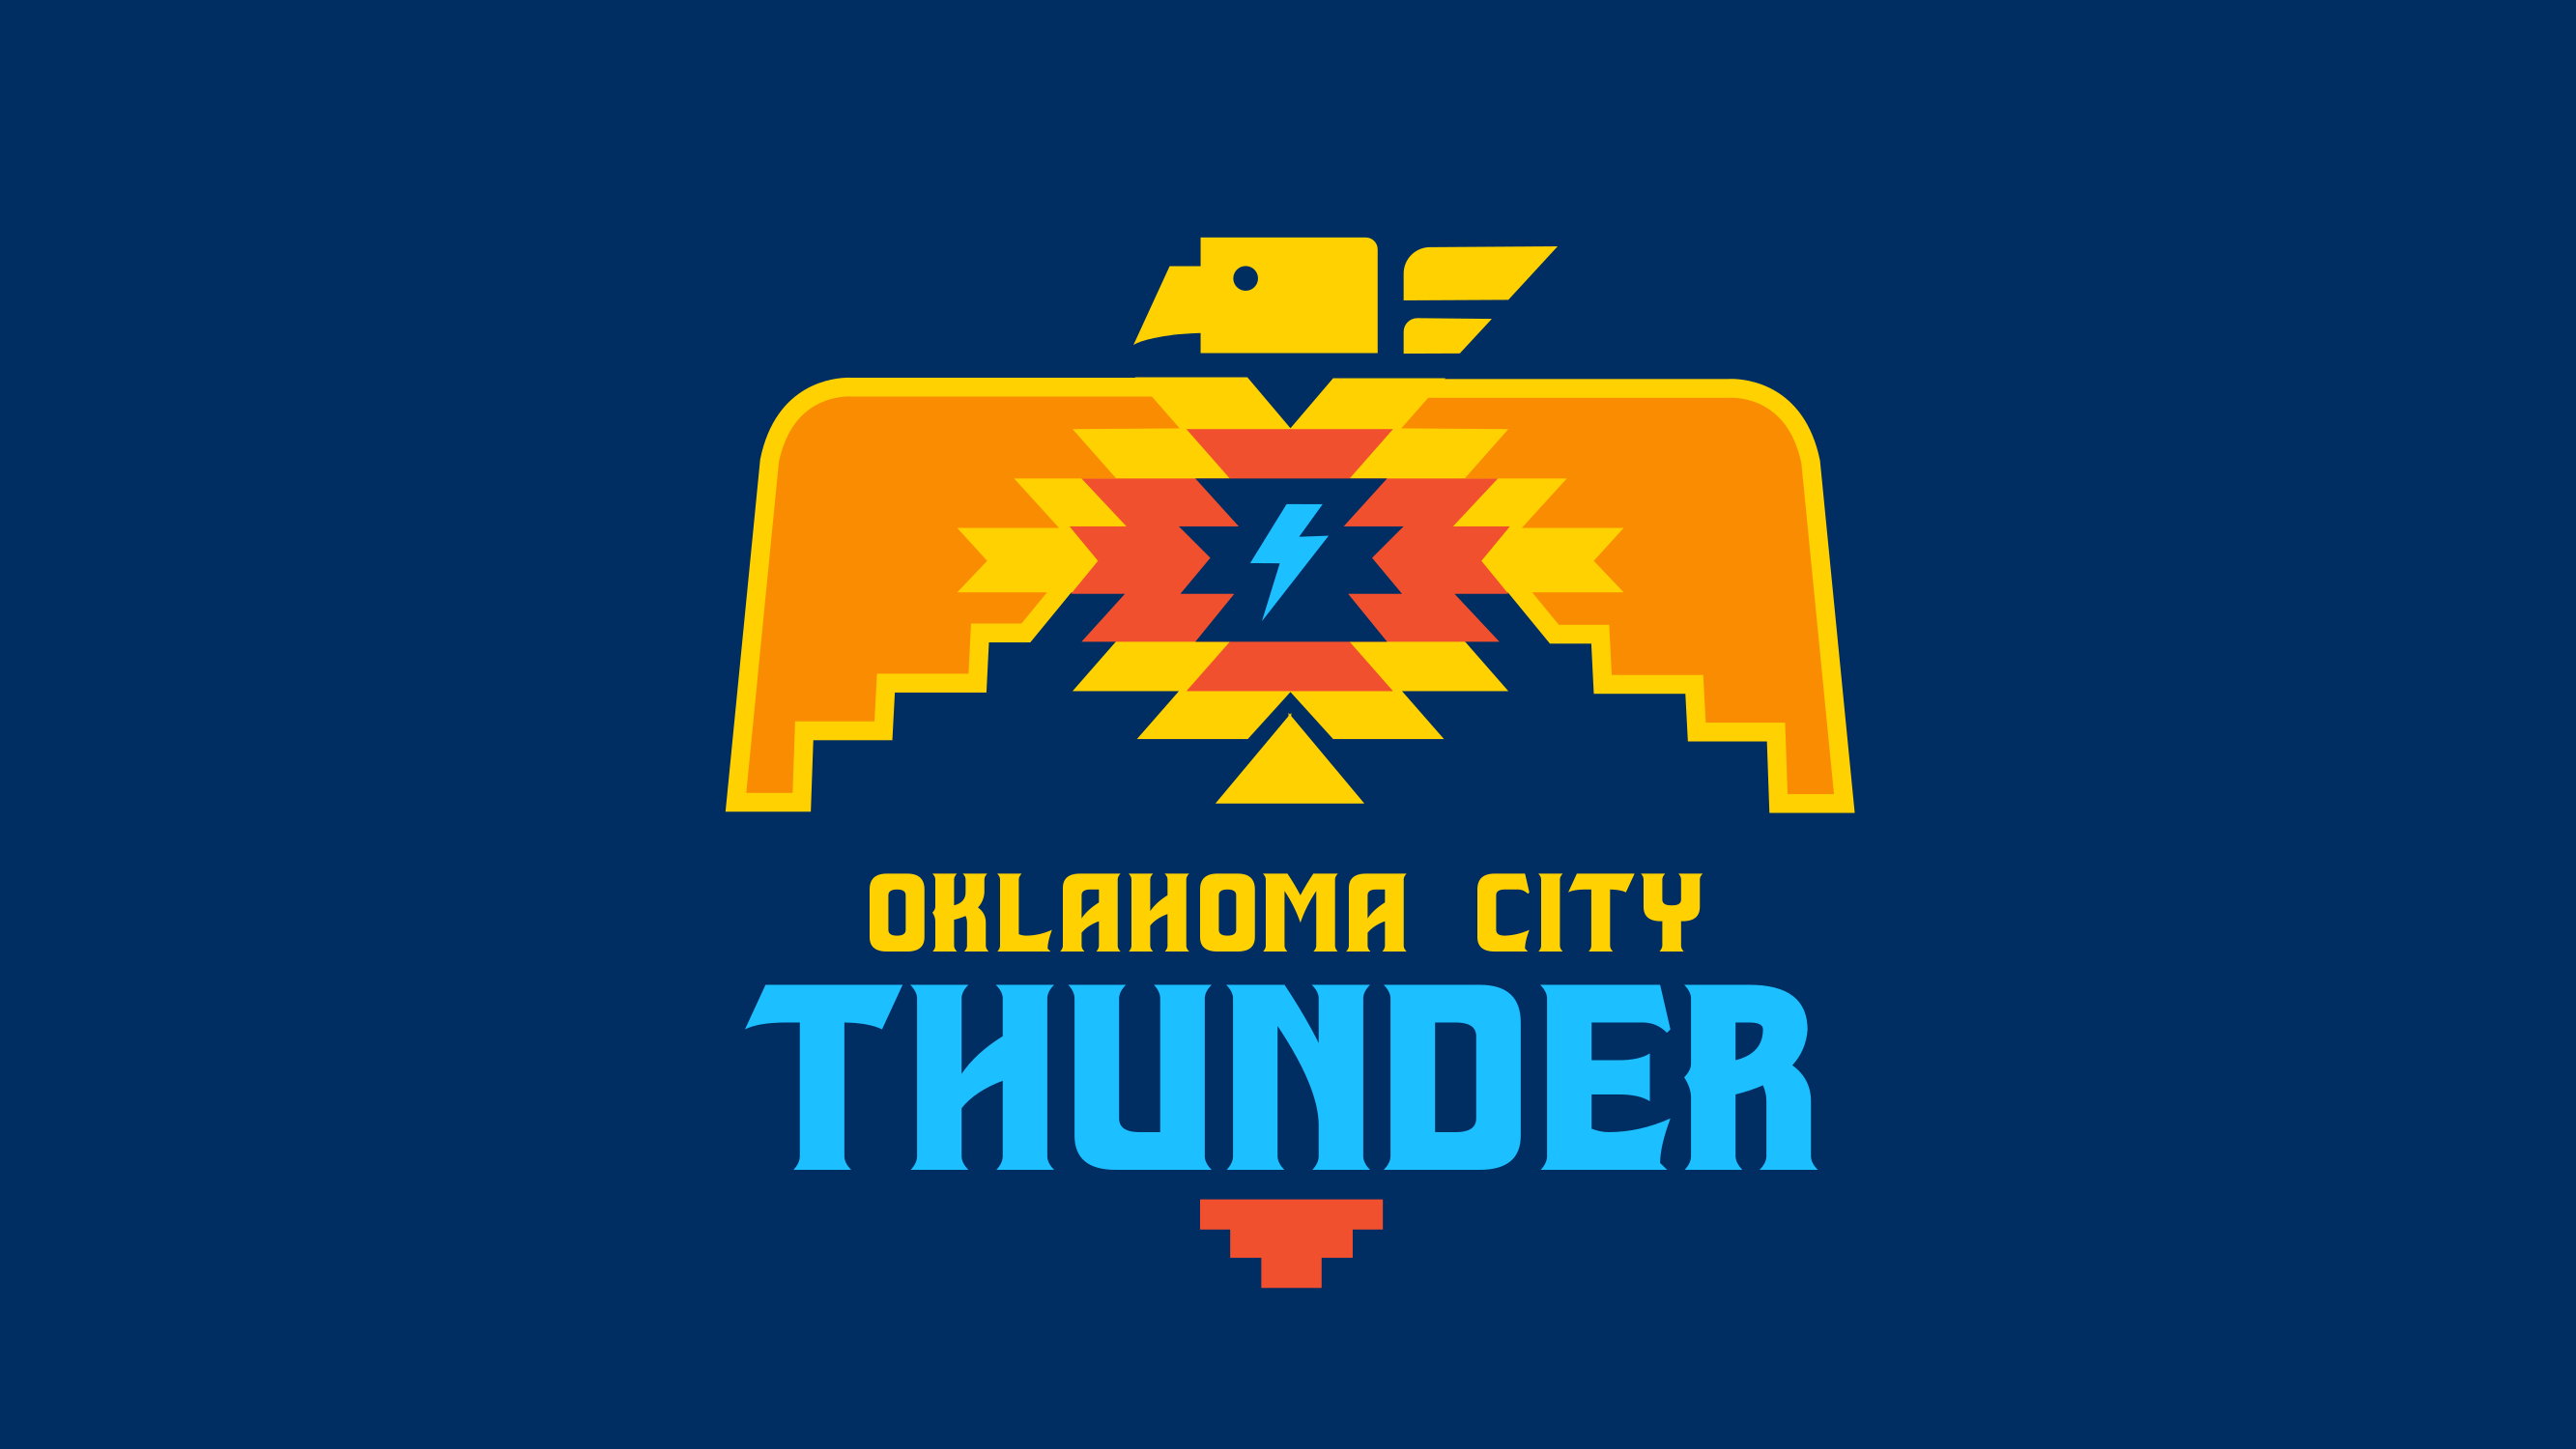 Oklahoma City Thunder Home Uniform  Oklahoma city thunder, Basketball  design, Thunder